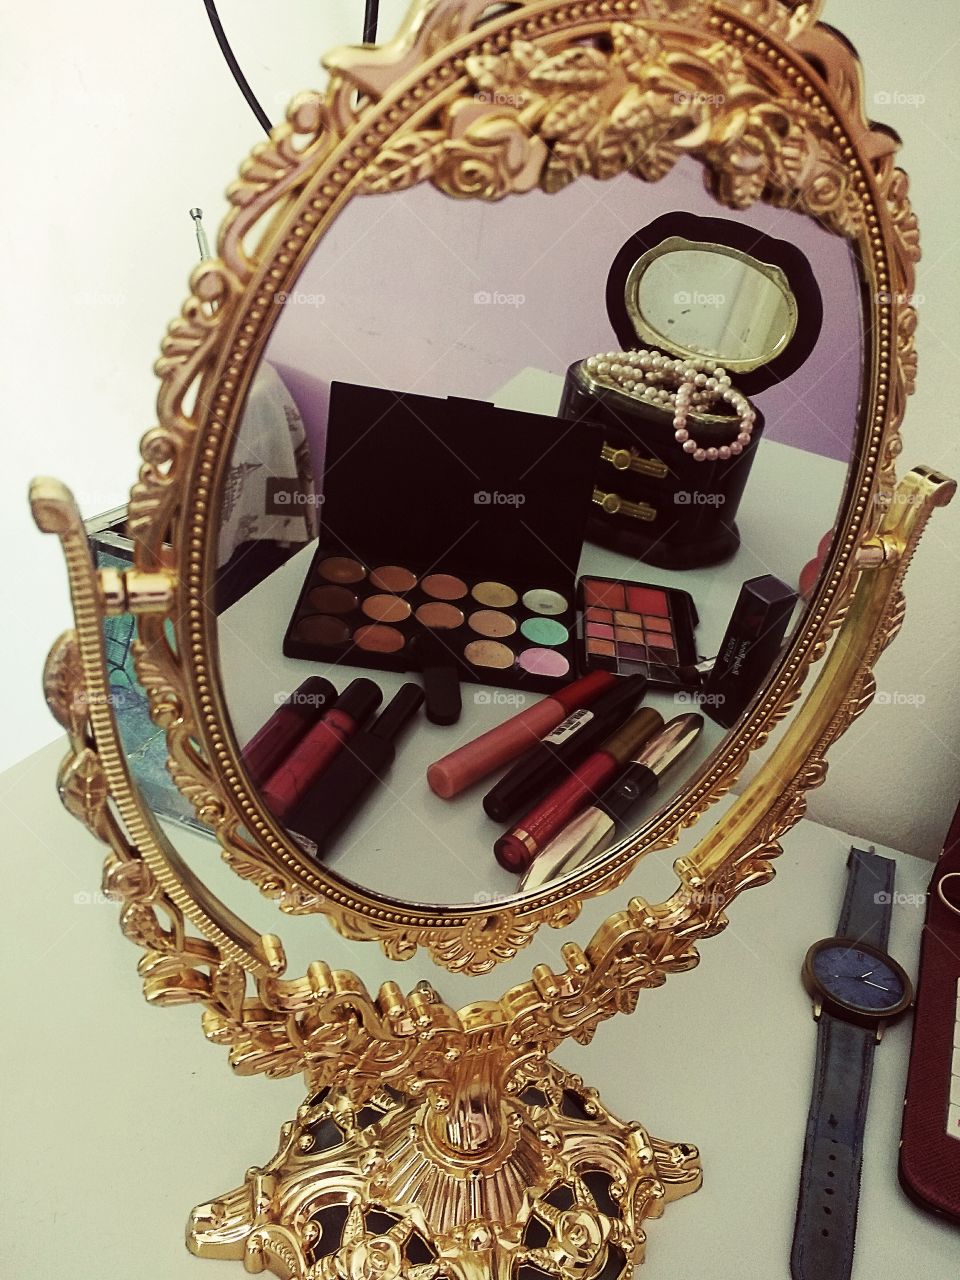 #make #beauty #Lipsticks #eyesshadow